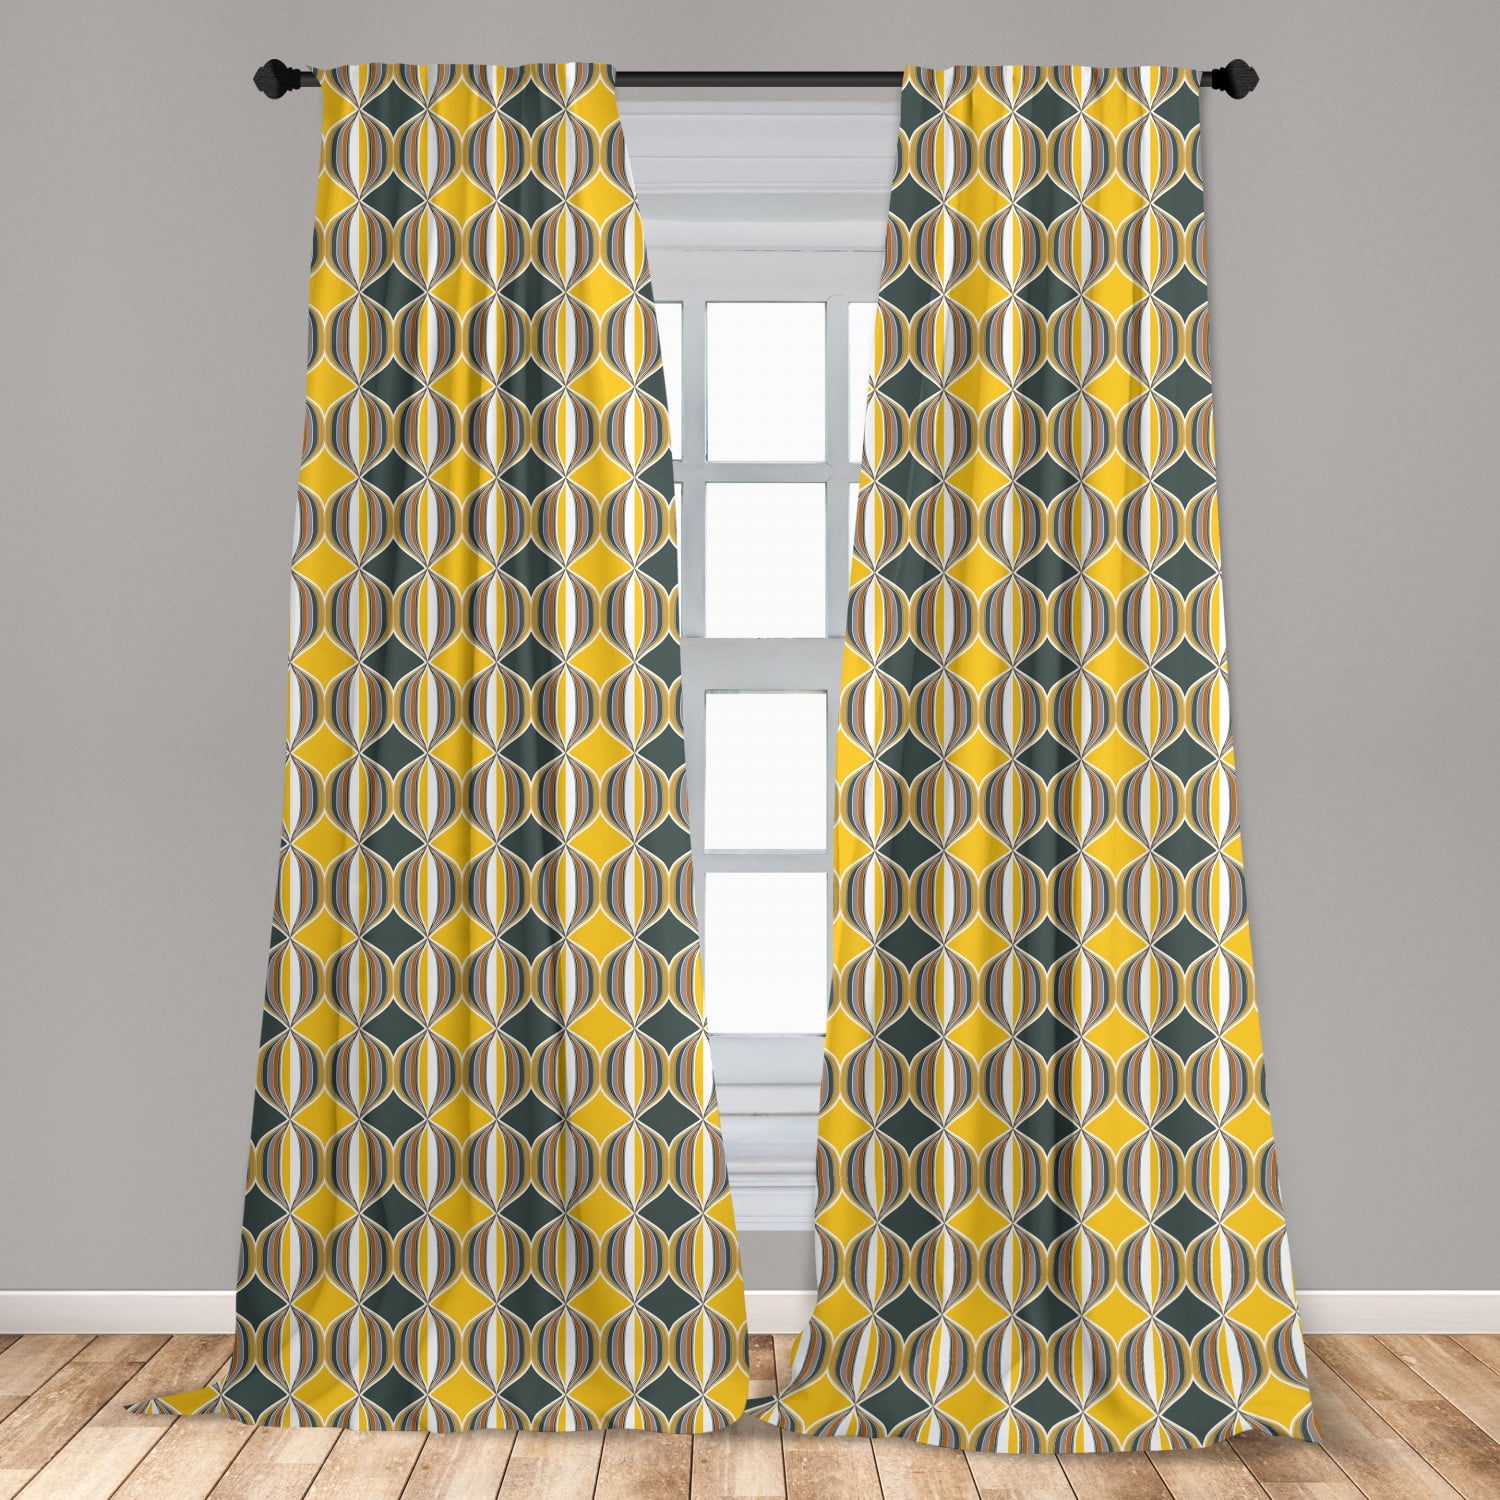 2 Window Panels, 2 Ties 4 Piece Sunshine Yellow/Grey/White Color Block Microfiber Curtain Set 108 inch Wide X 84 inch Long 